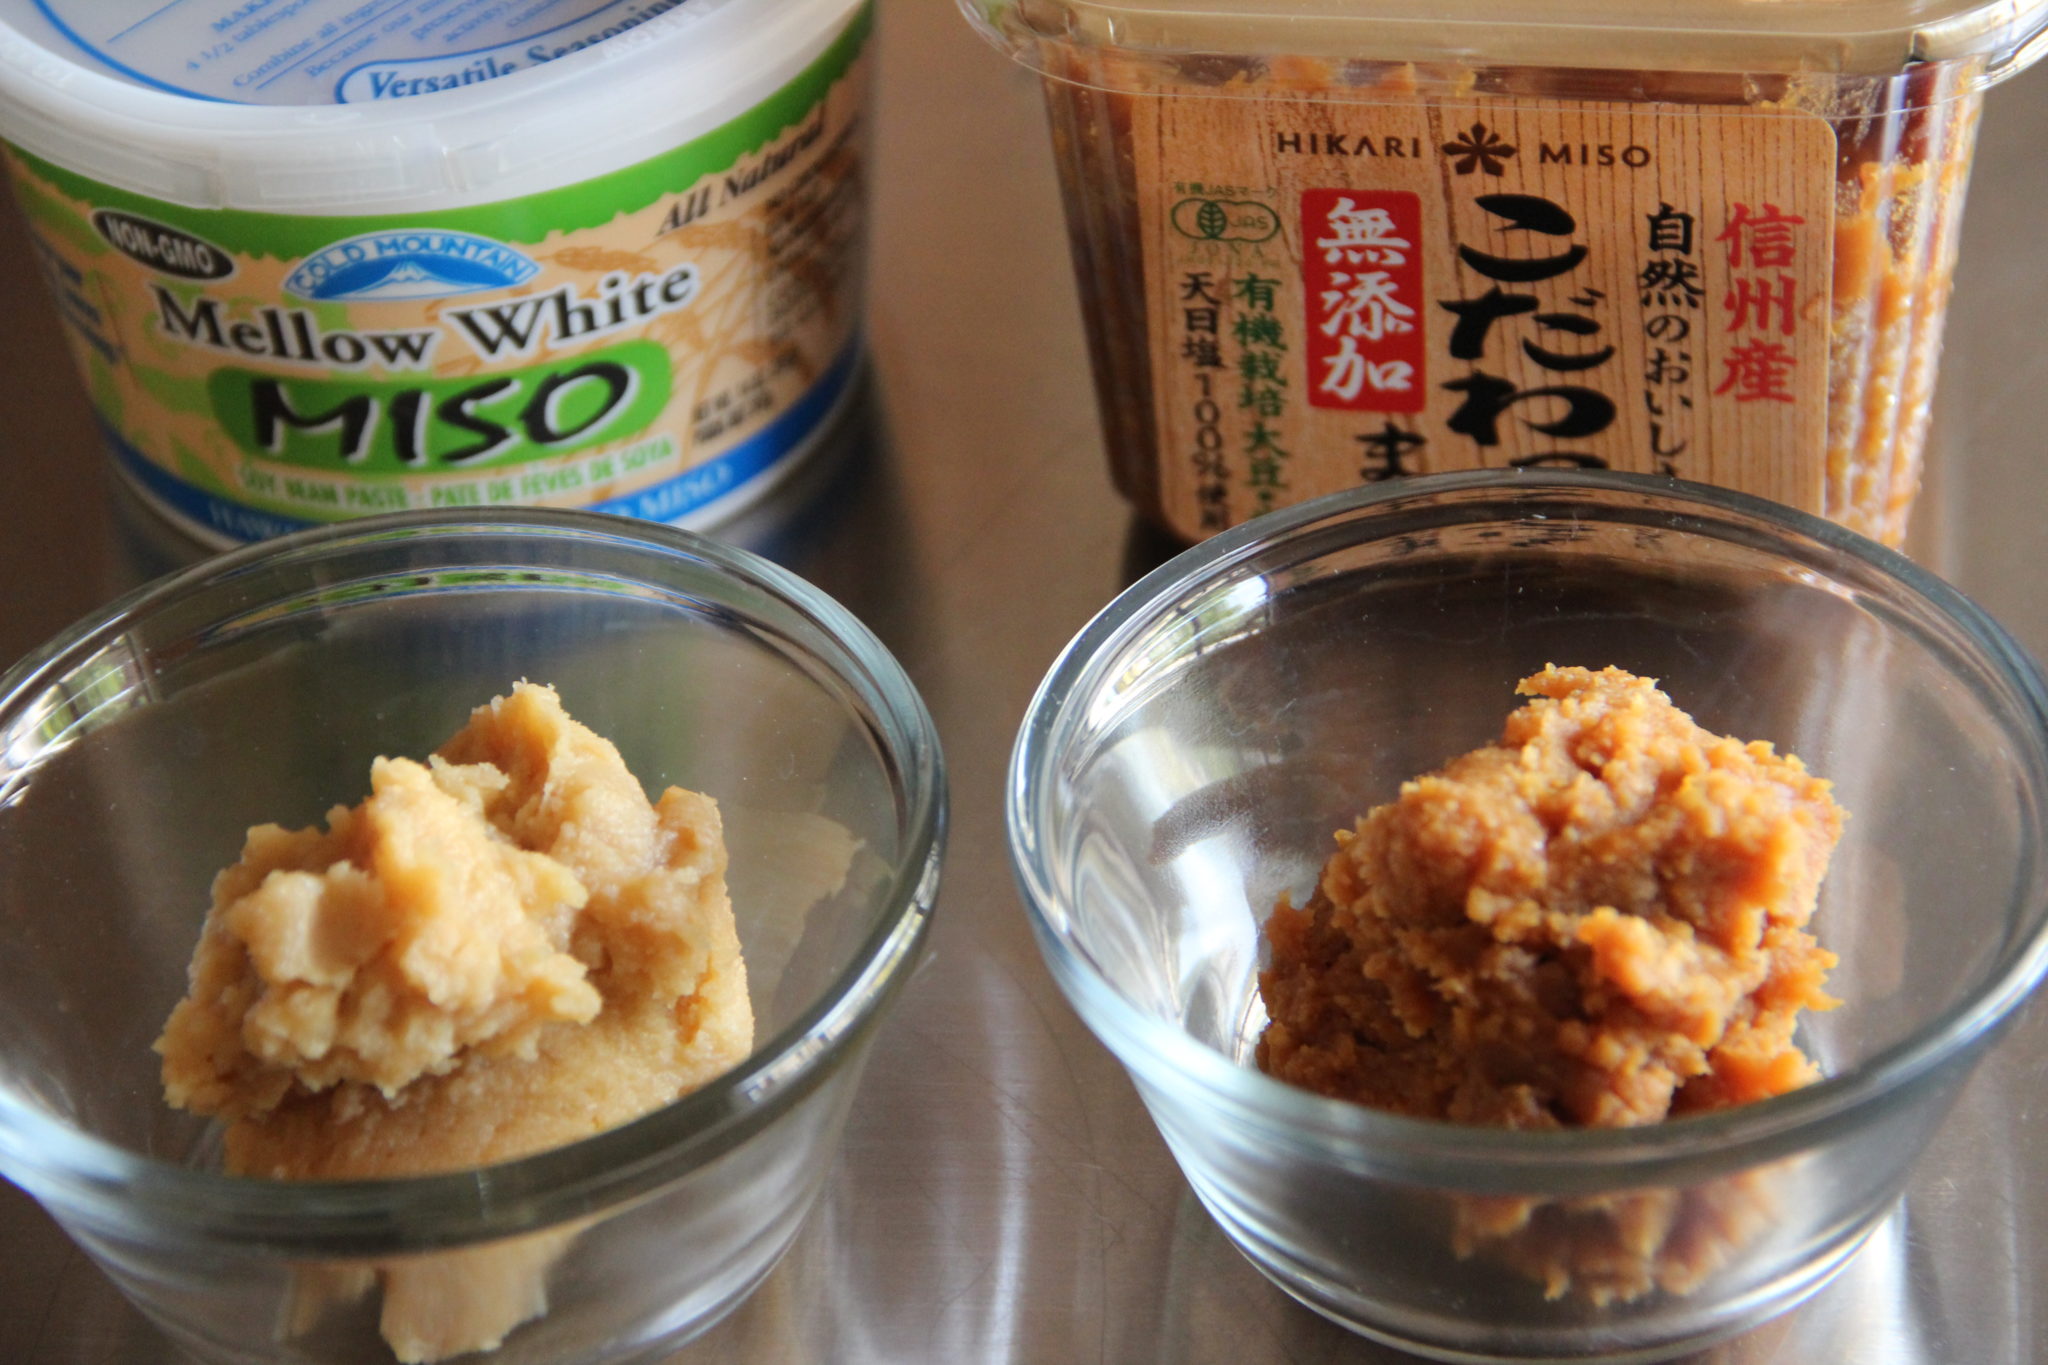 roland white miso paste